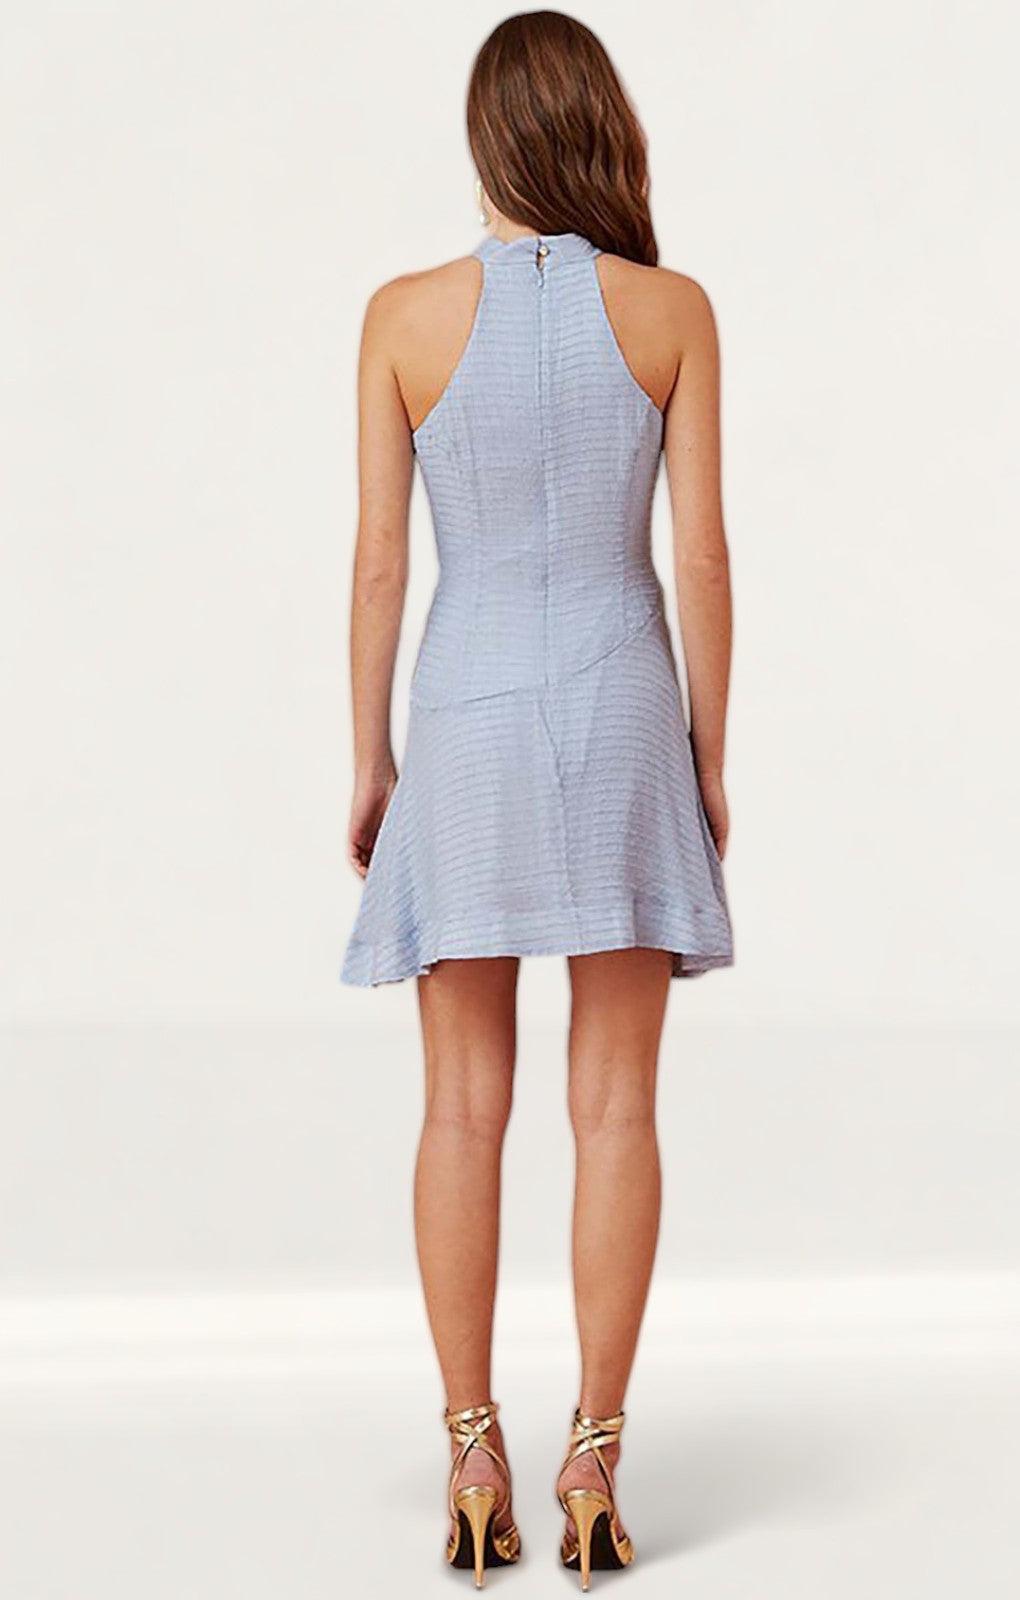 Keepsake The Label Sky New Look Mini Dress product image